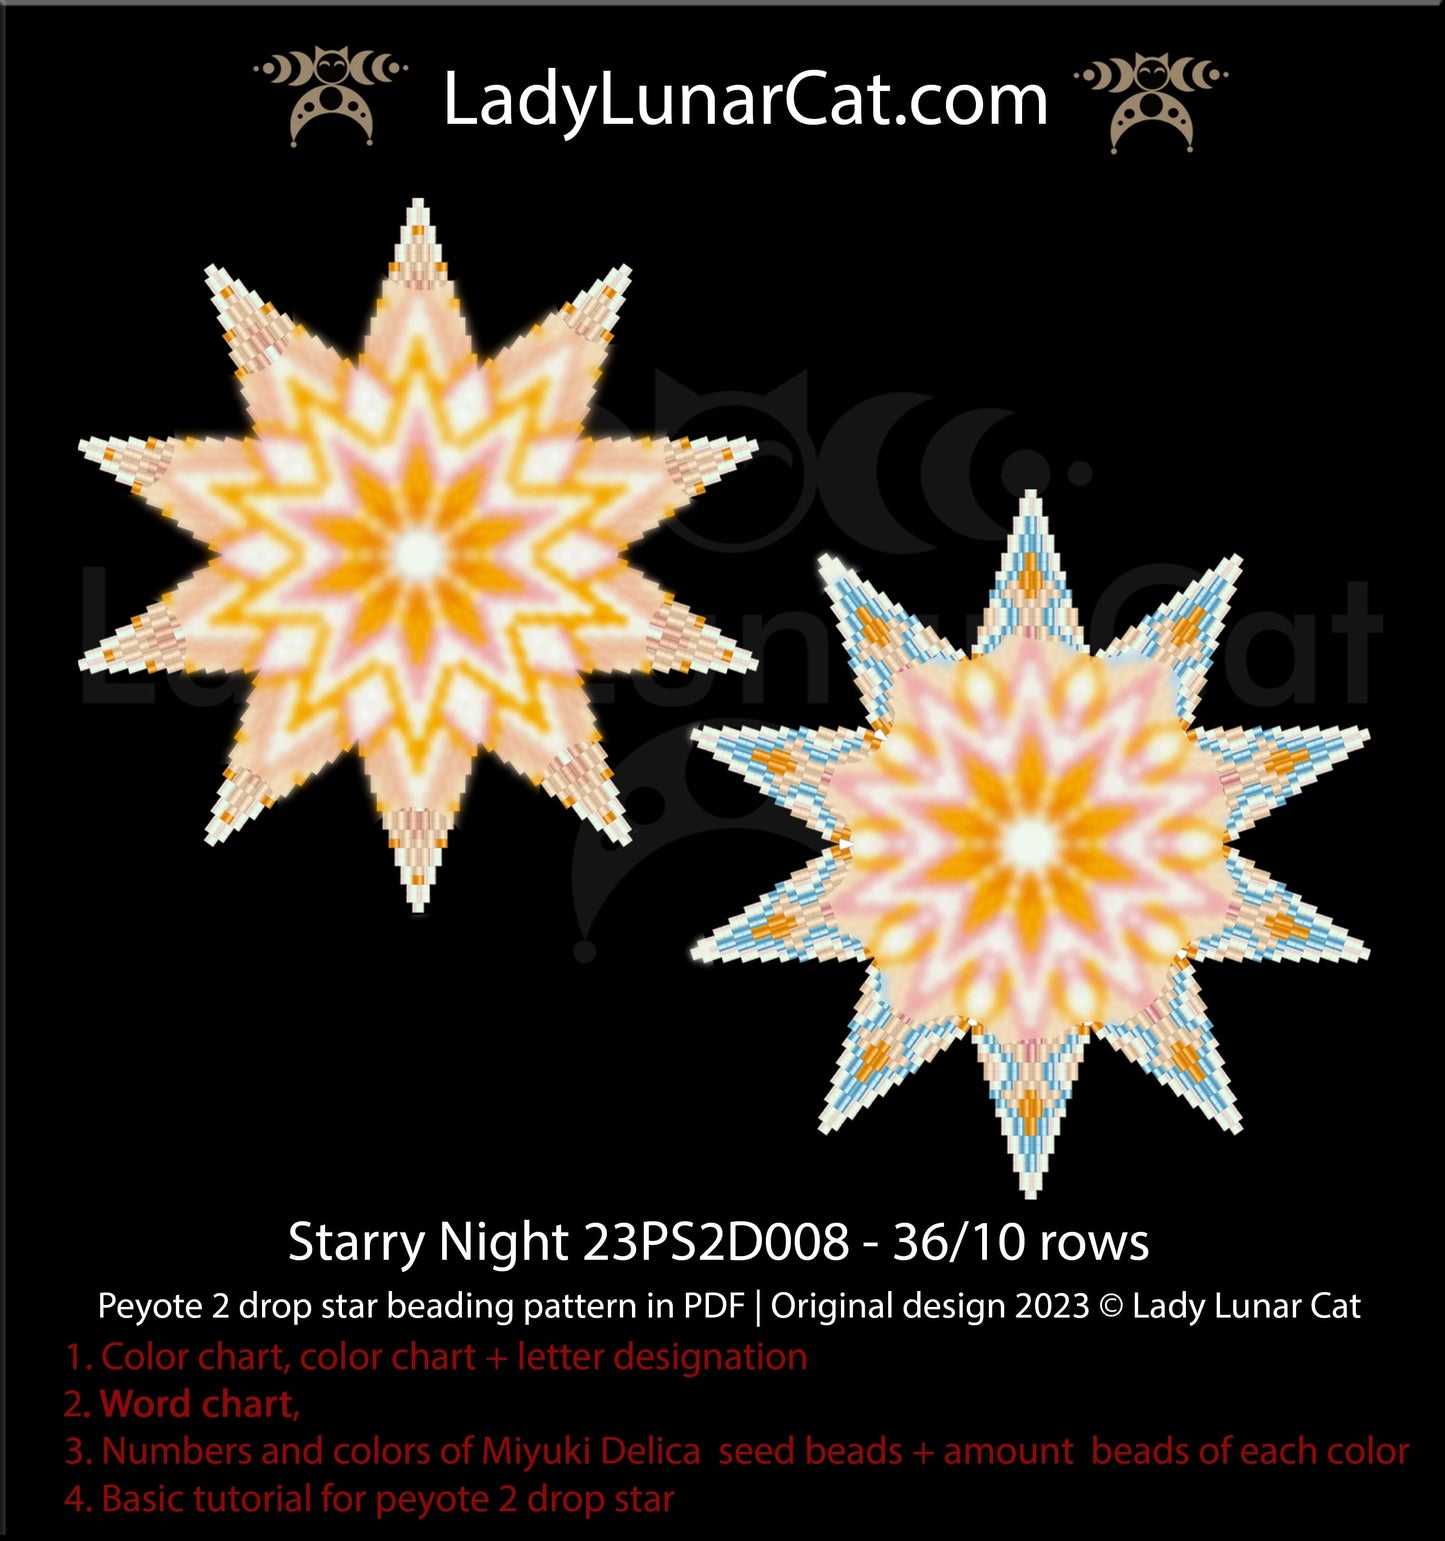 Copy of Peyote 2 drop star pattern for beading - Frosty Kiss 23PS2D007 11 rows + Basic star 2 drop LadyLunarCat